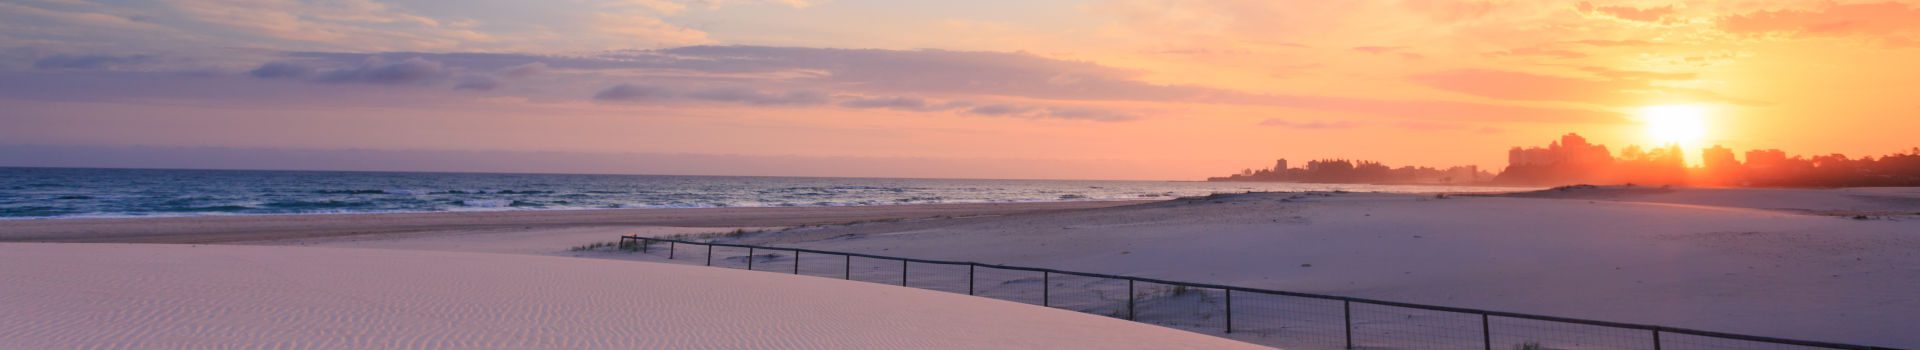 Redseason - Holidays - Kirra Beach At Sunrise (queensland, Australia)